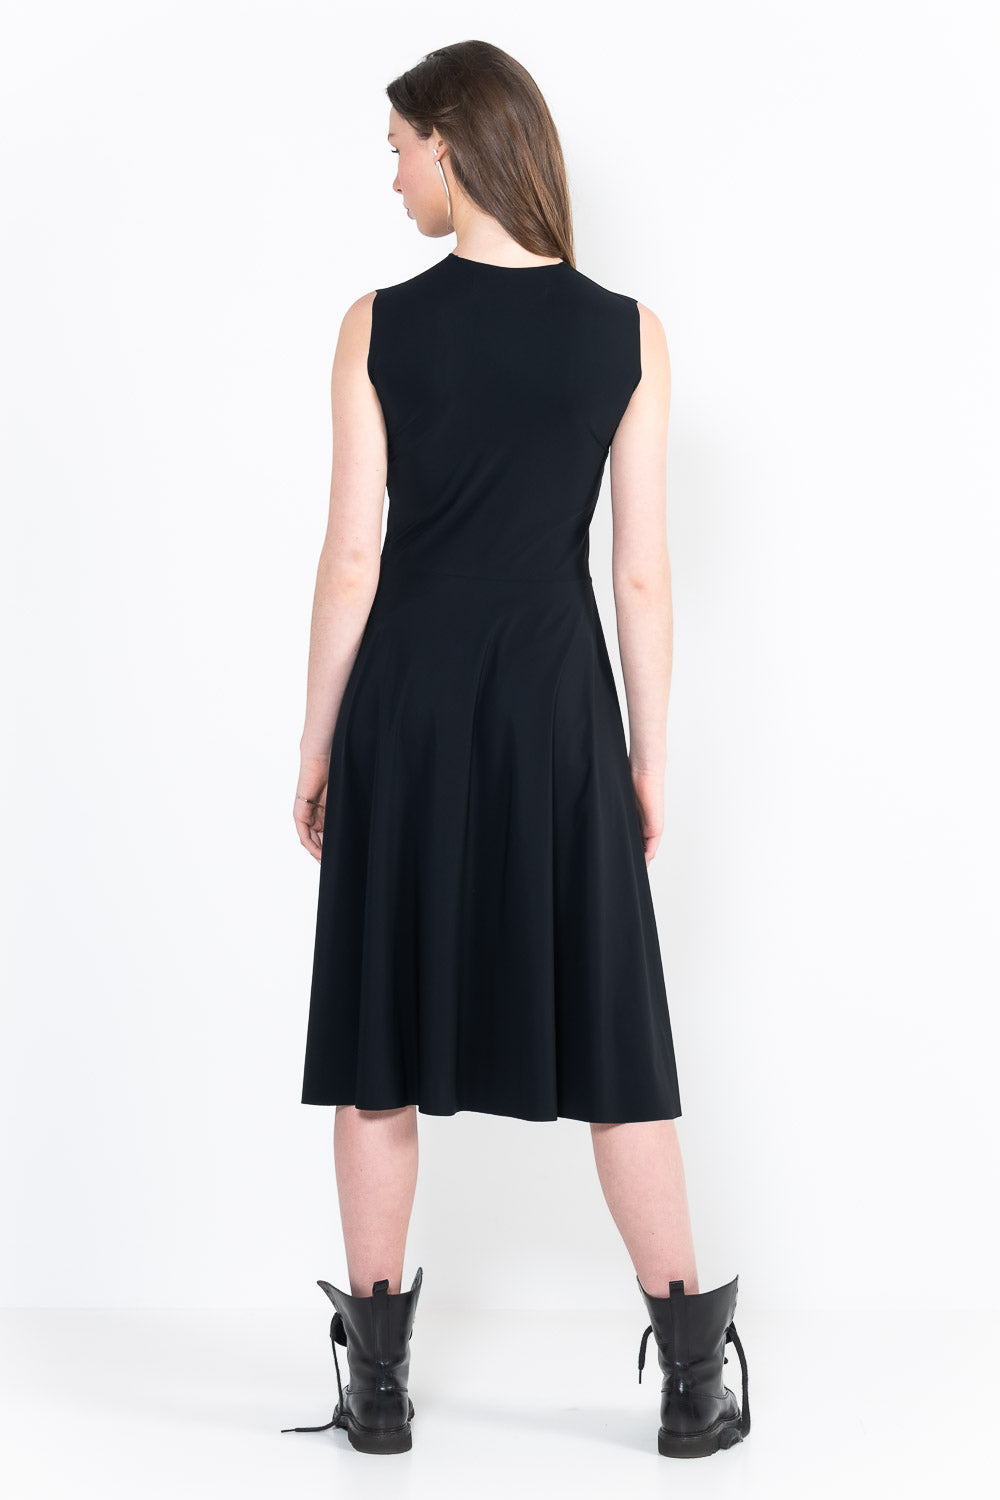 L84 Short sleeveless melania dress